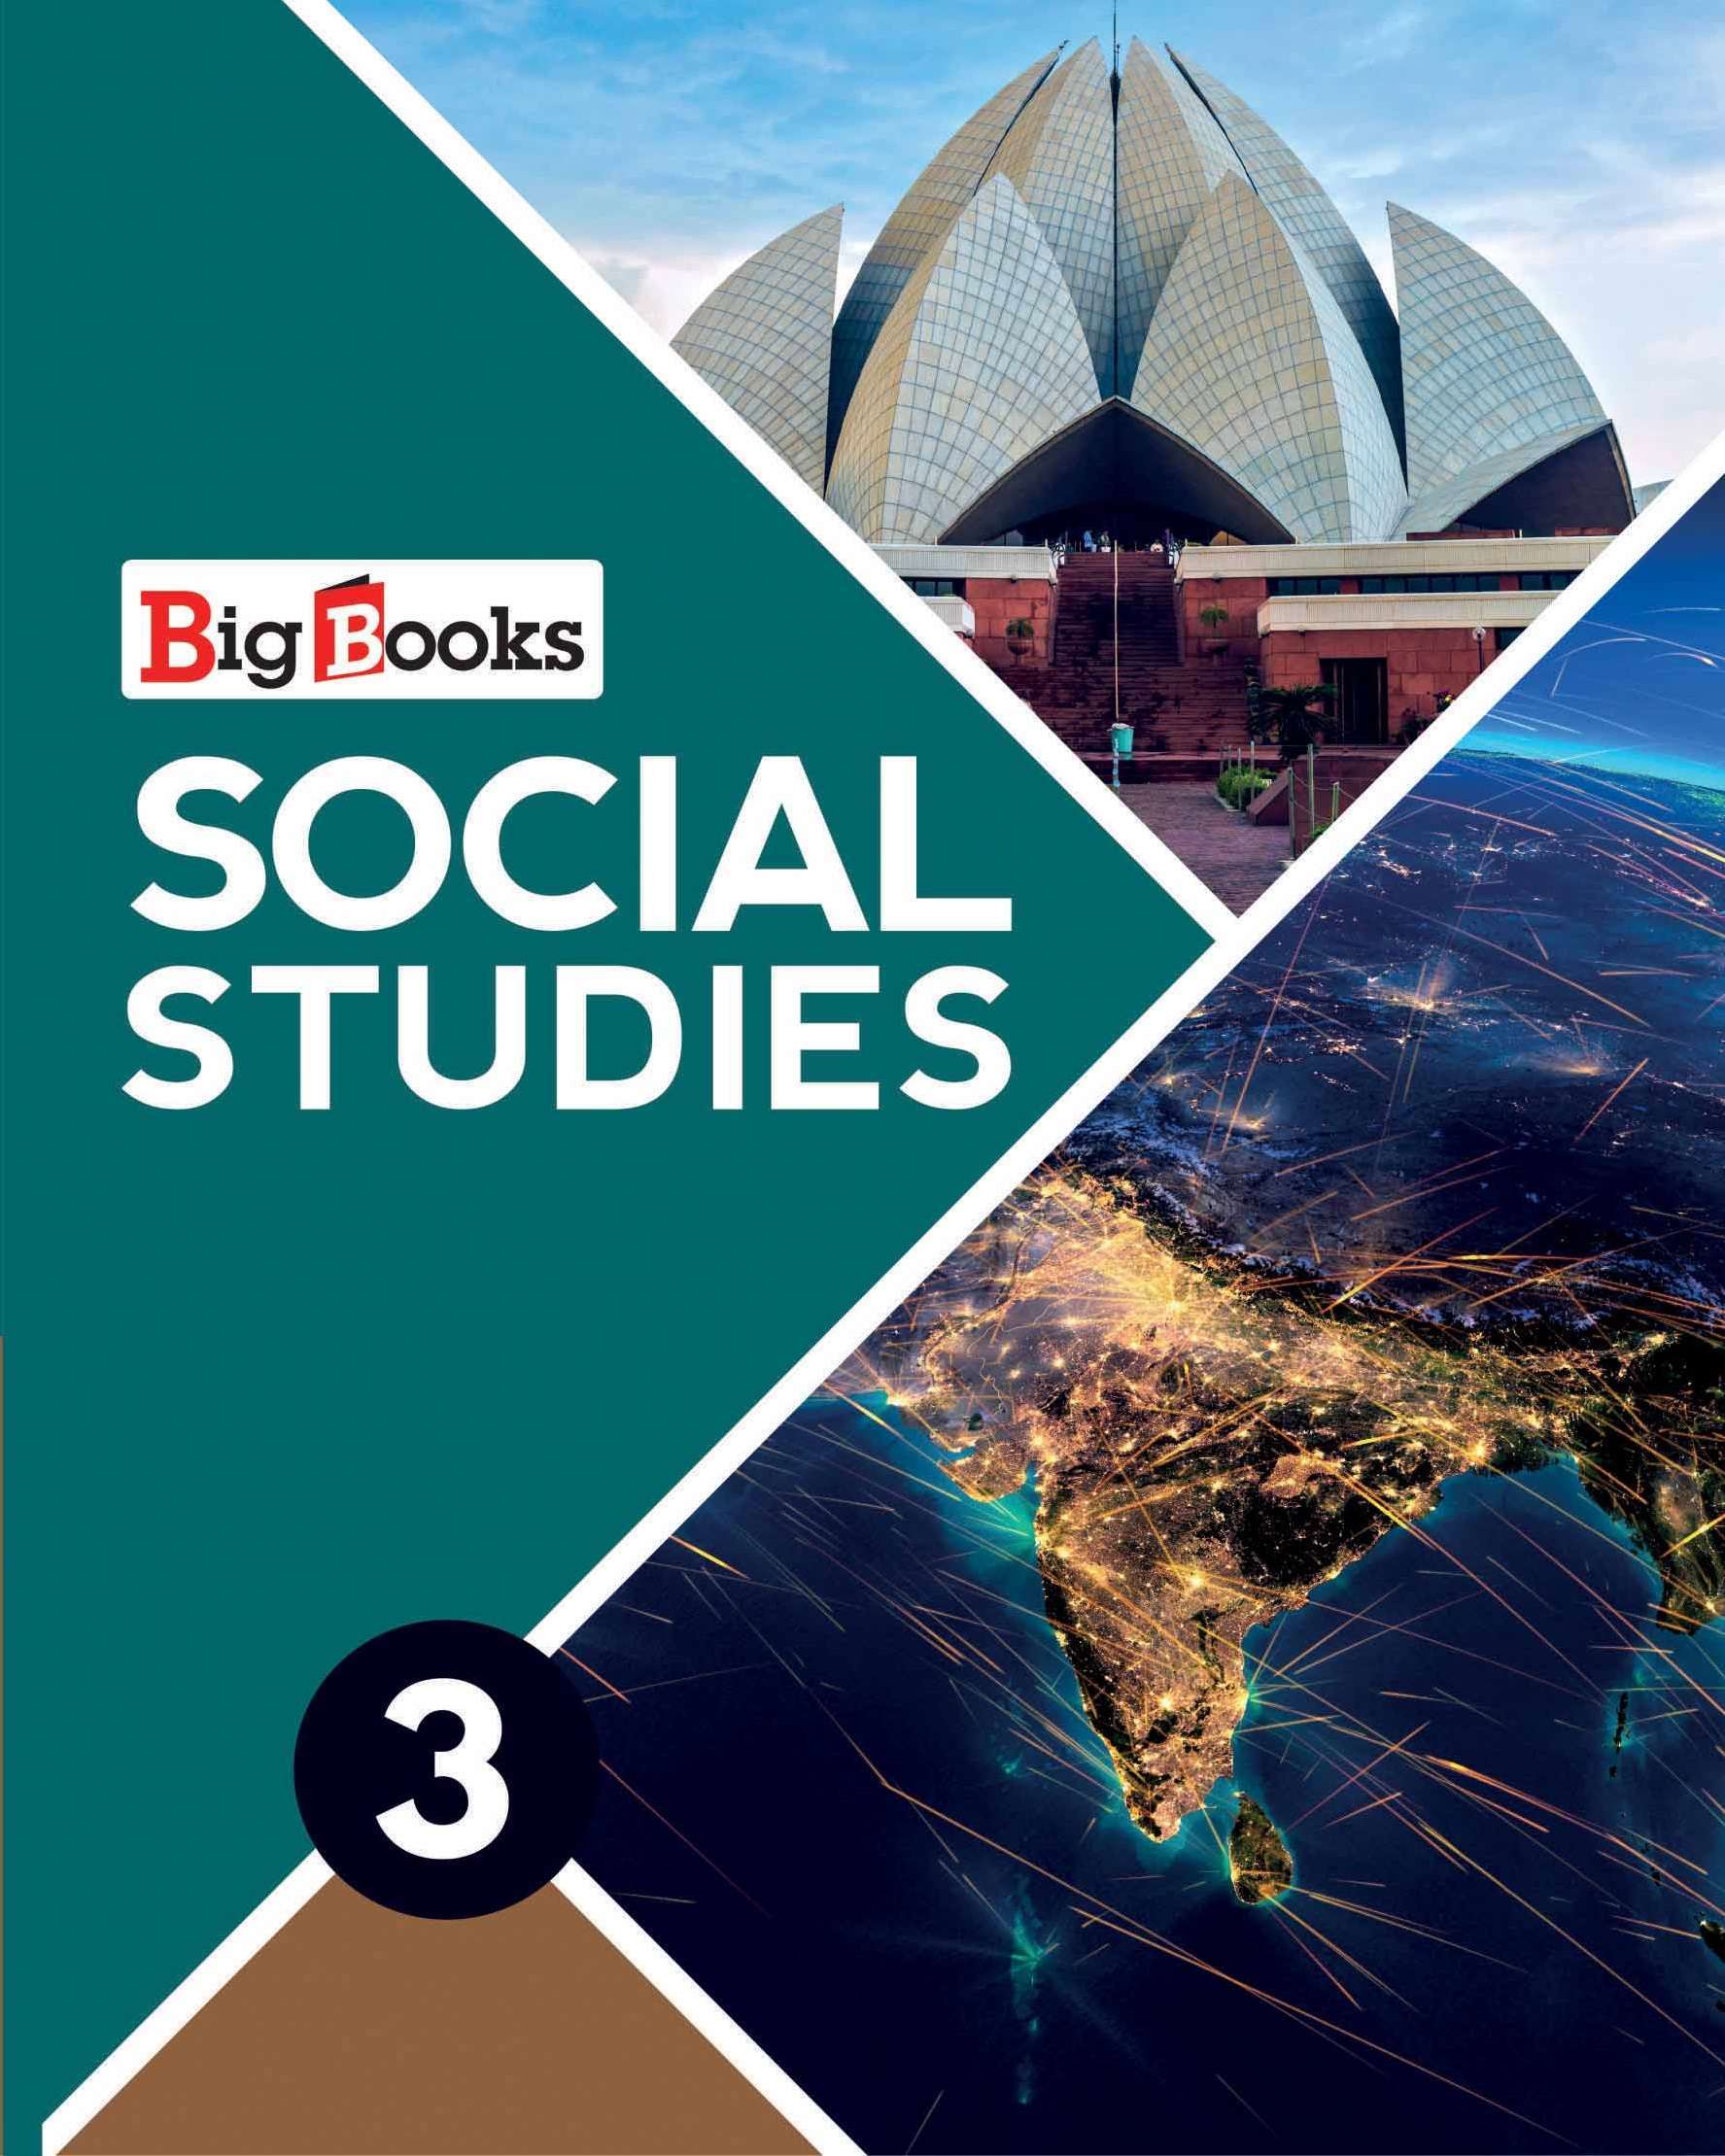 Buy Social studies book for 3 online